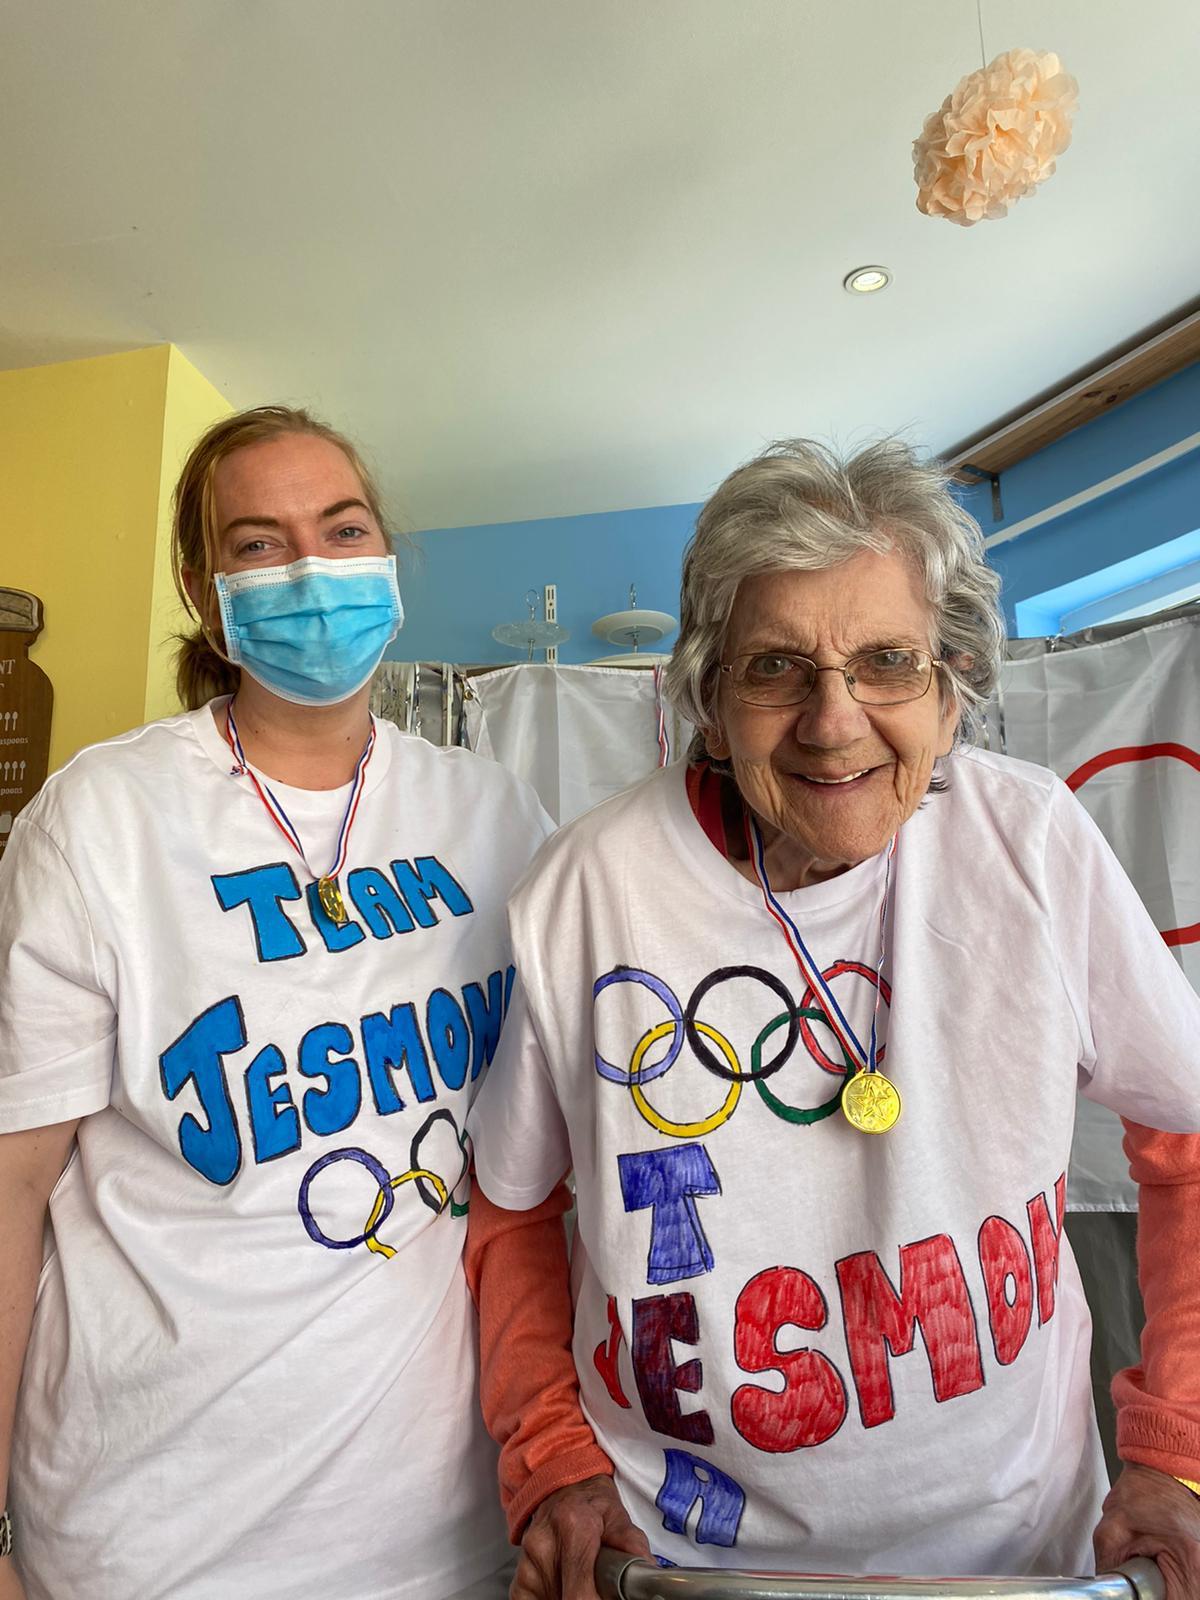 Margaret McNicol (80) and Deputy Manager Rachael Hope sporting Team Jesmond t-shirts